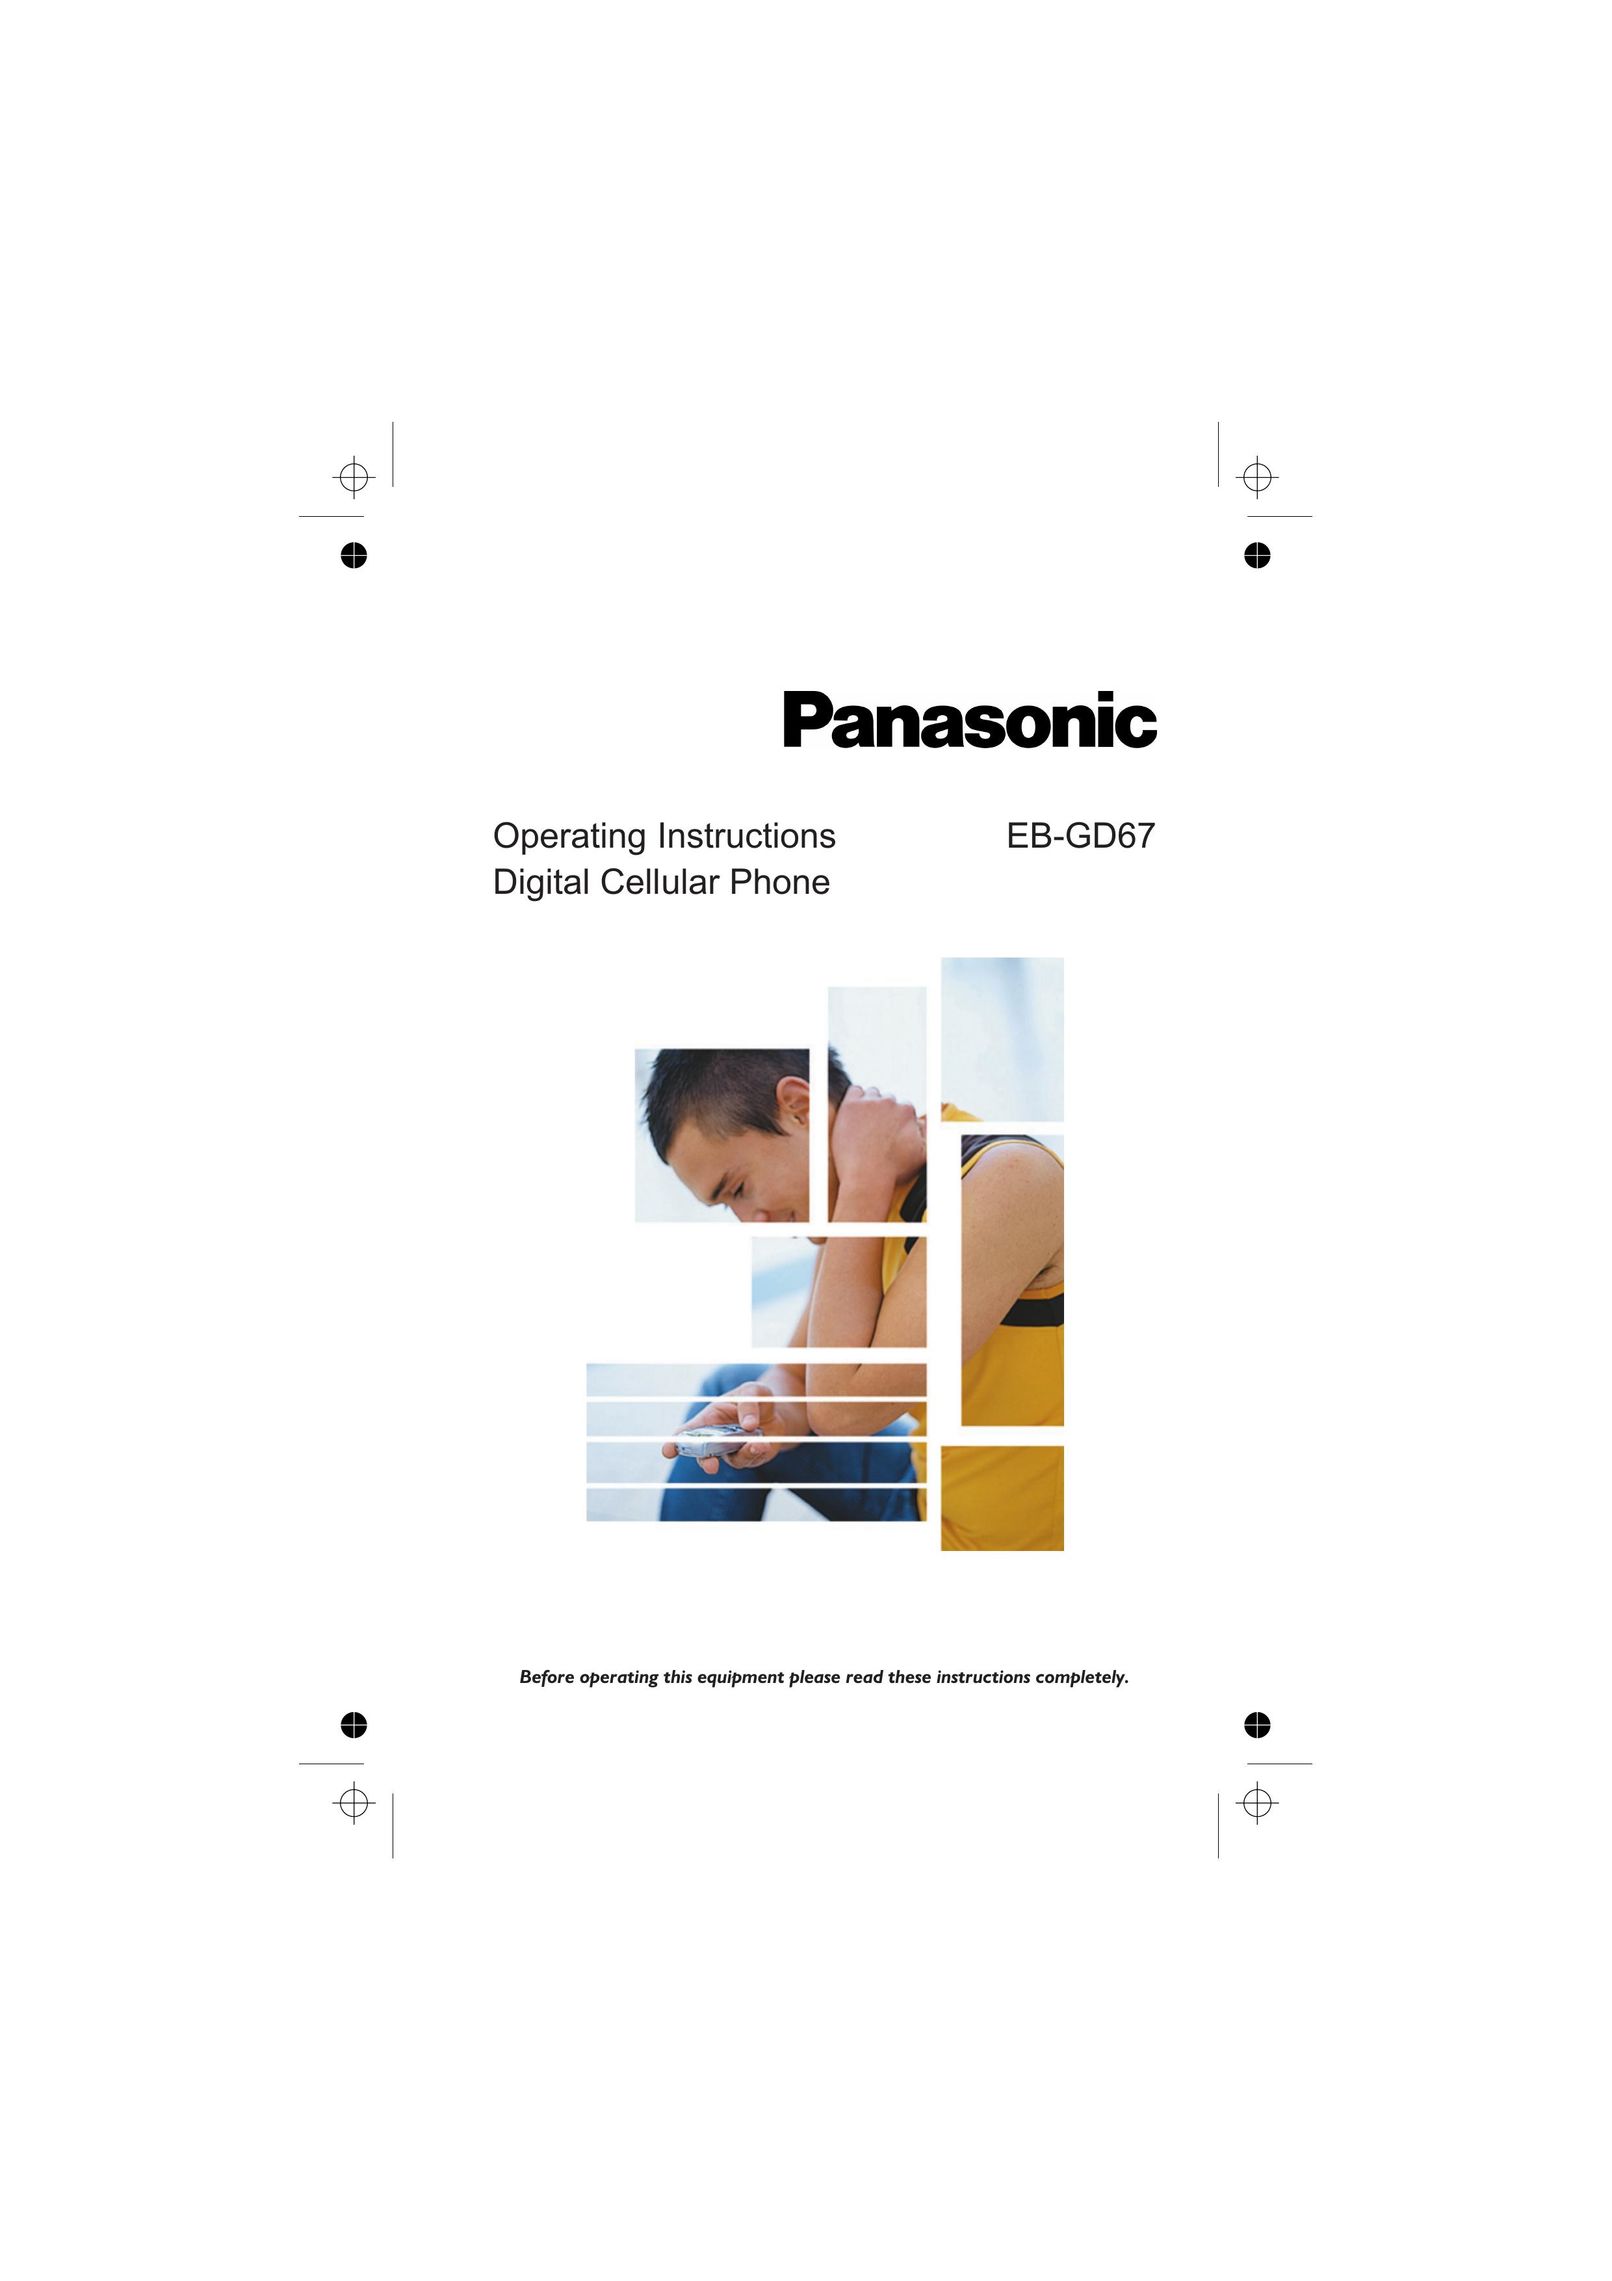 Panasonic EB-GD67 Cell Phone User Manual